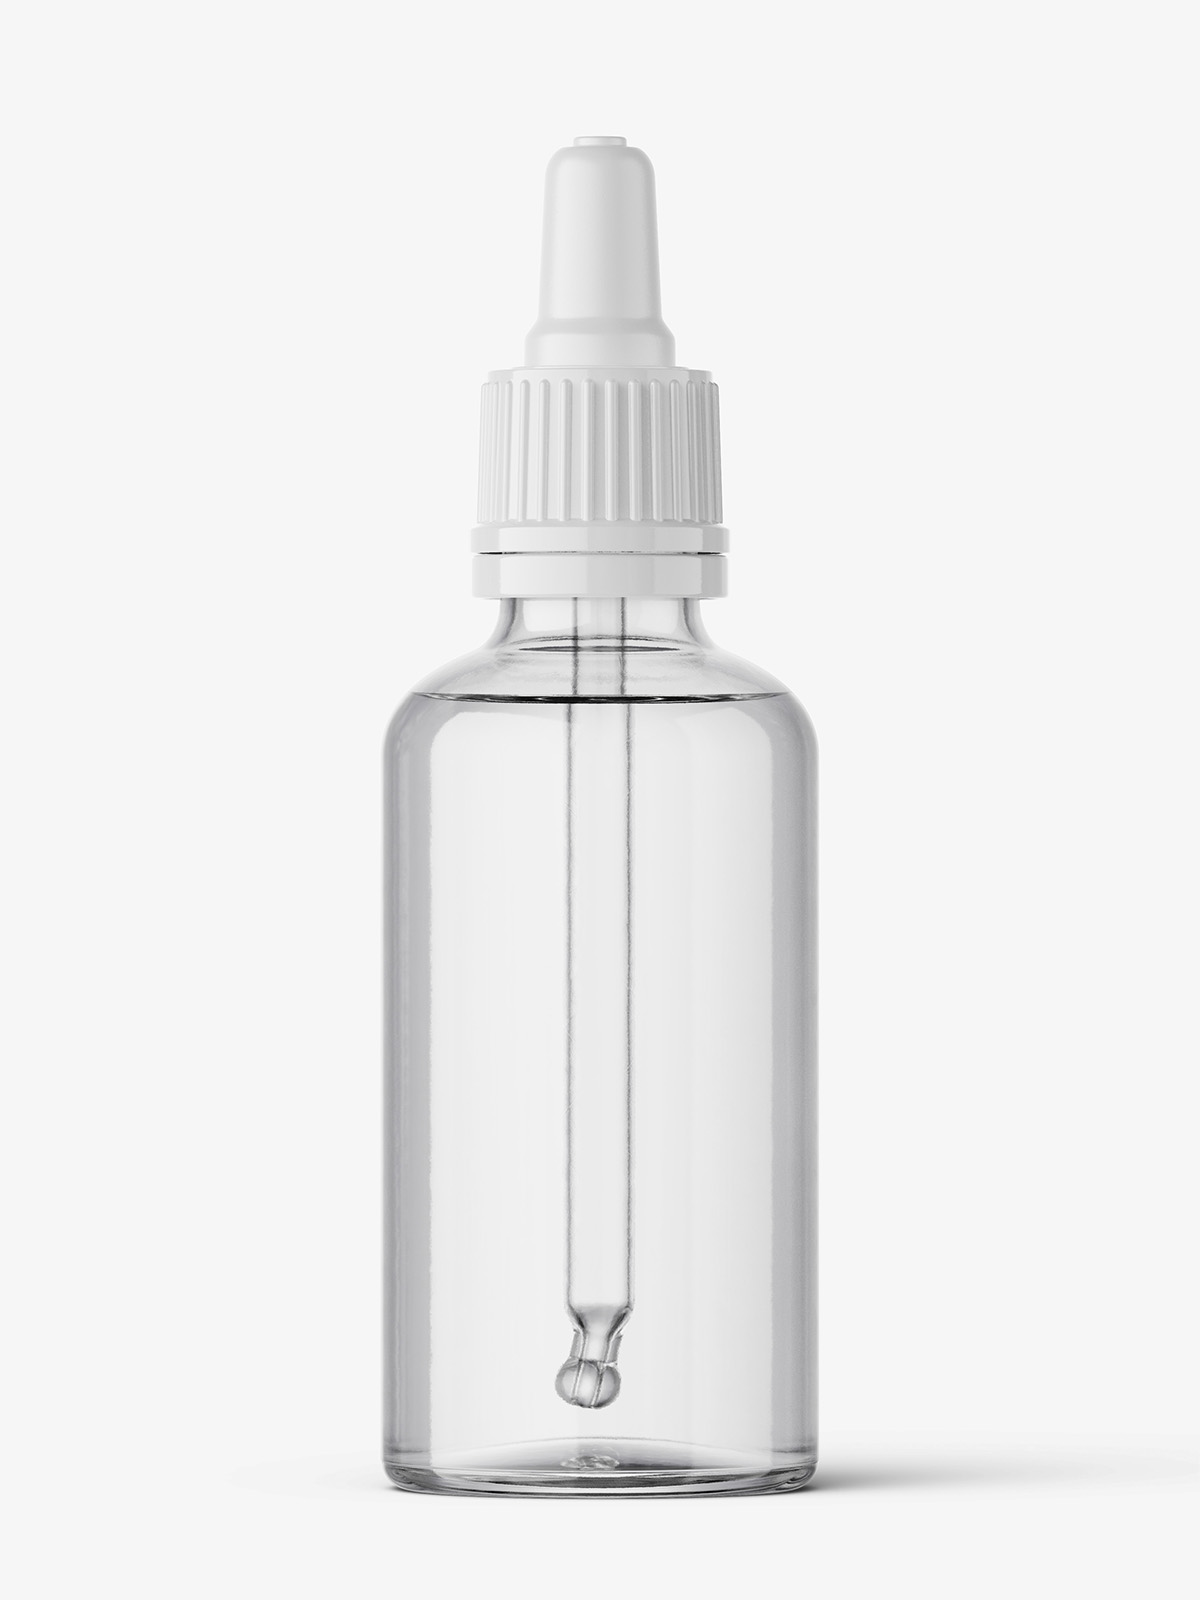 50ml Clear Glass Dropper Bottle W/ Kraft Label Mockup - Free Download  Images High Quality PNG, JPG